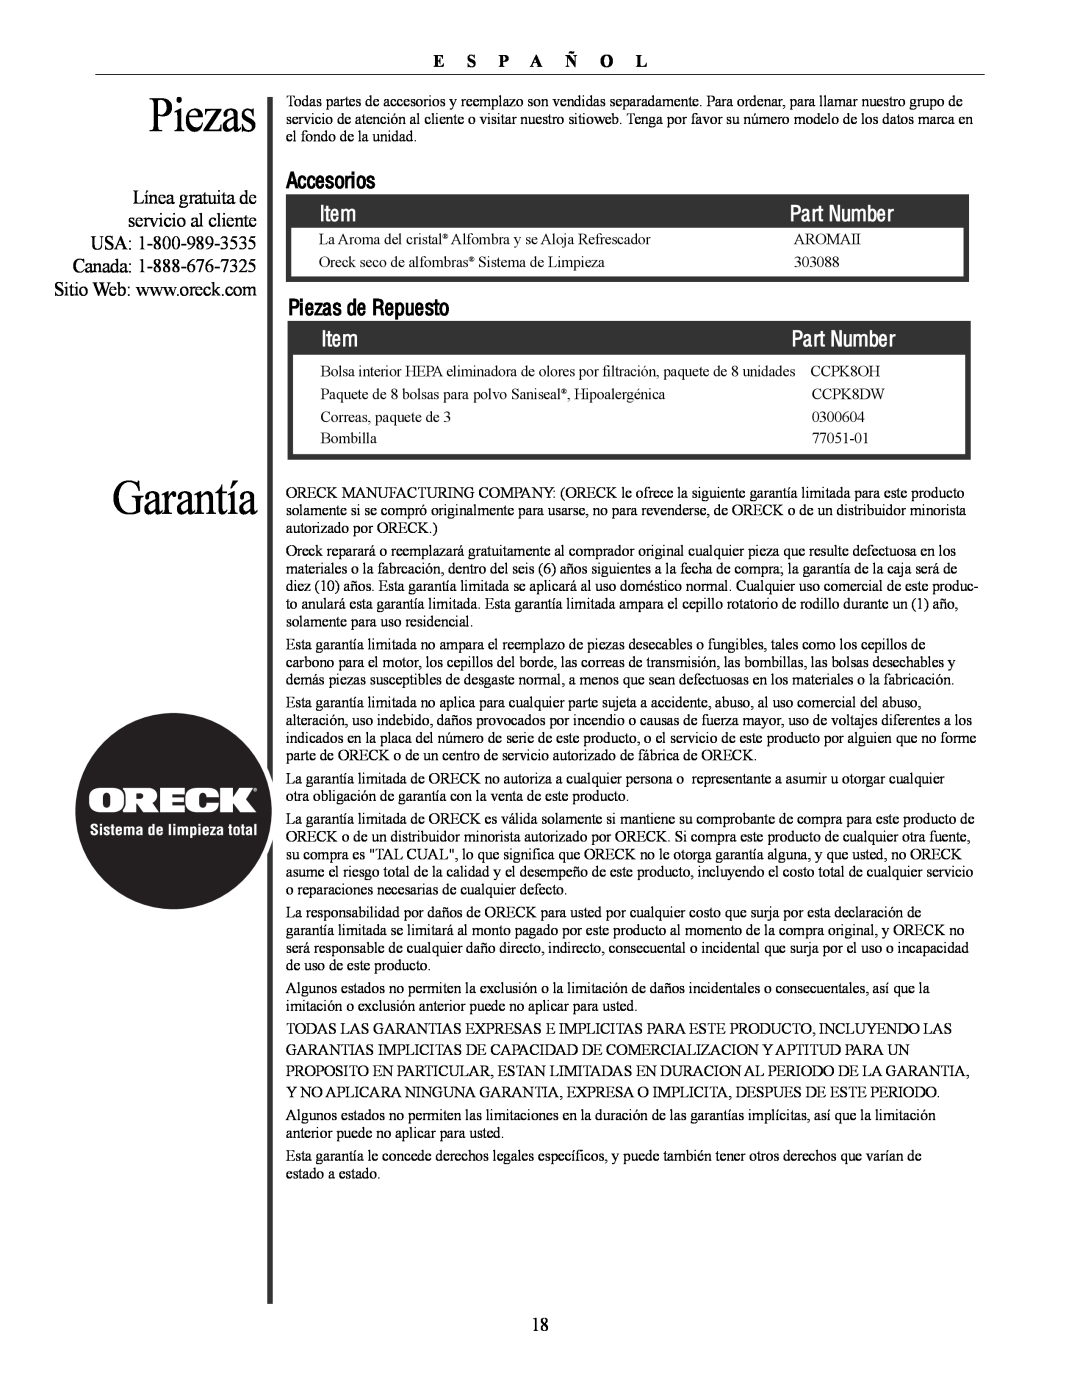 Oreck U4300 manual Piezas, Garantía, Part Number, Línea gratuita de servicio al cliente USA, E S P A ñ O L 